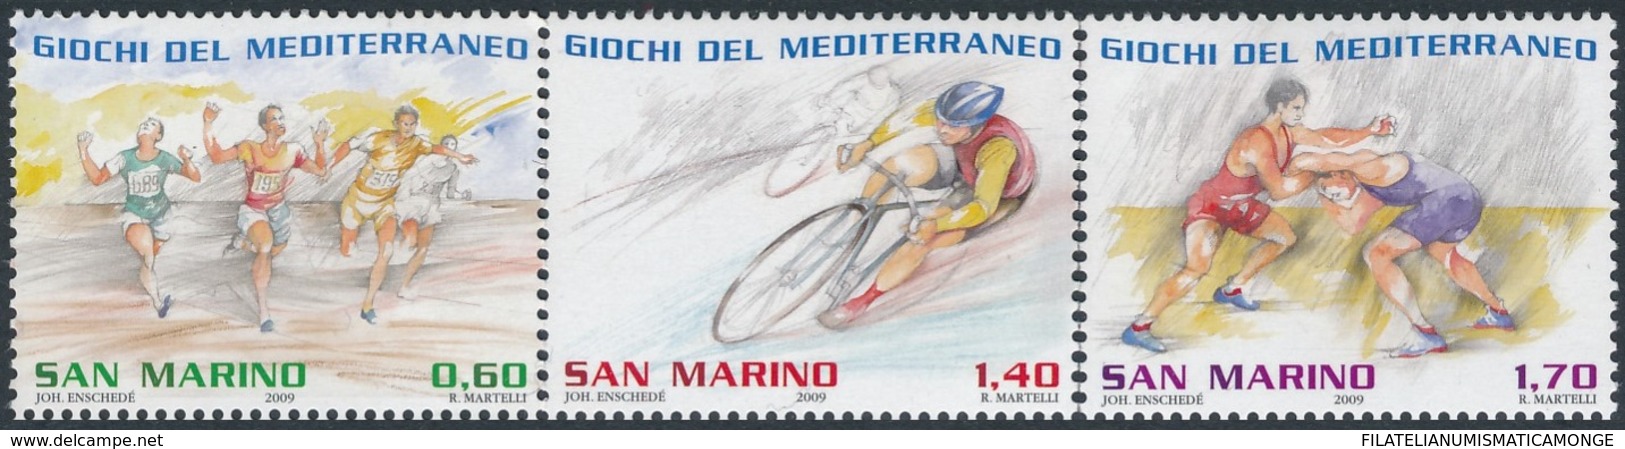 San Marino 2009 Correo 2194/96 Juegos Mediterraneo 2009 (3s)  **/MNH - Unused Stamps